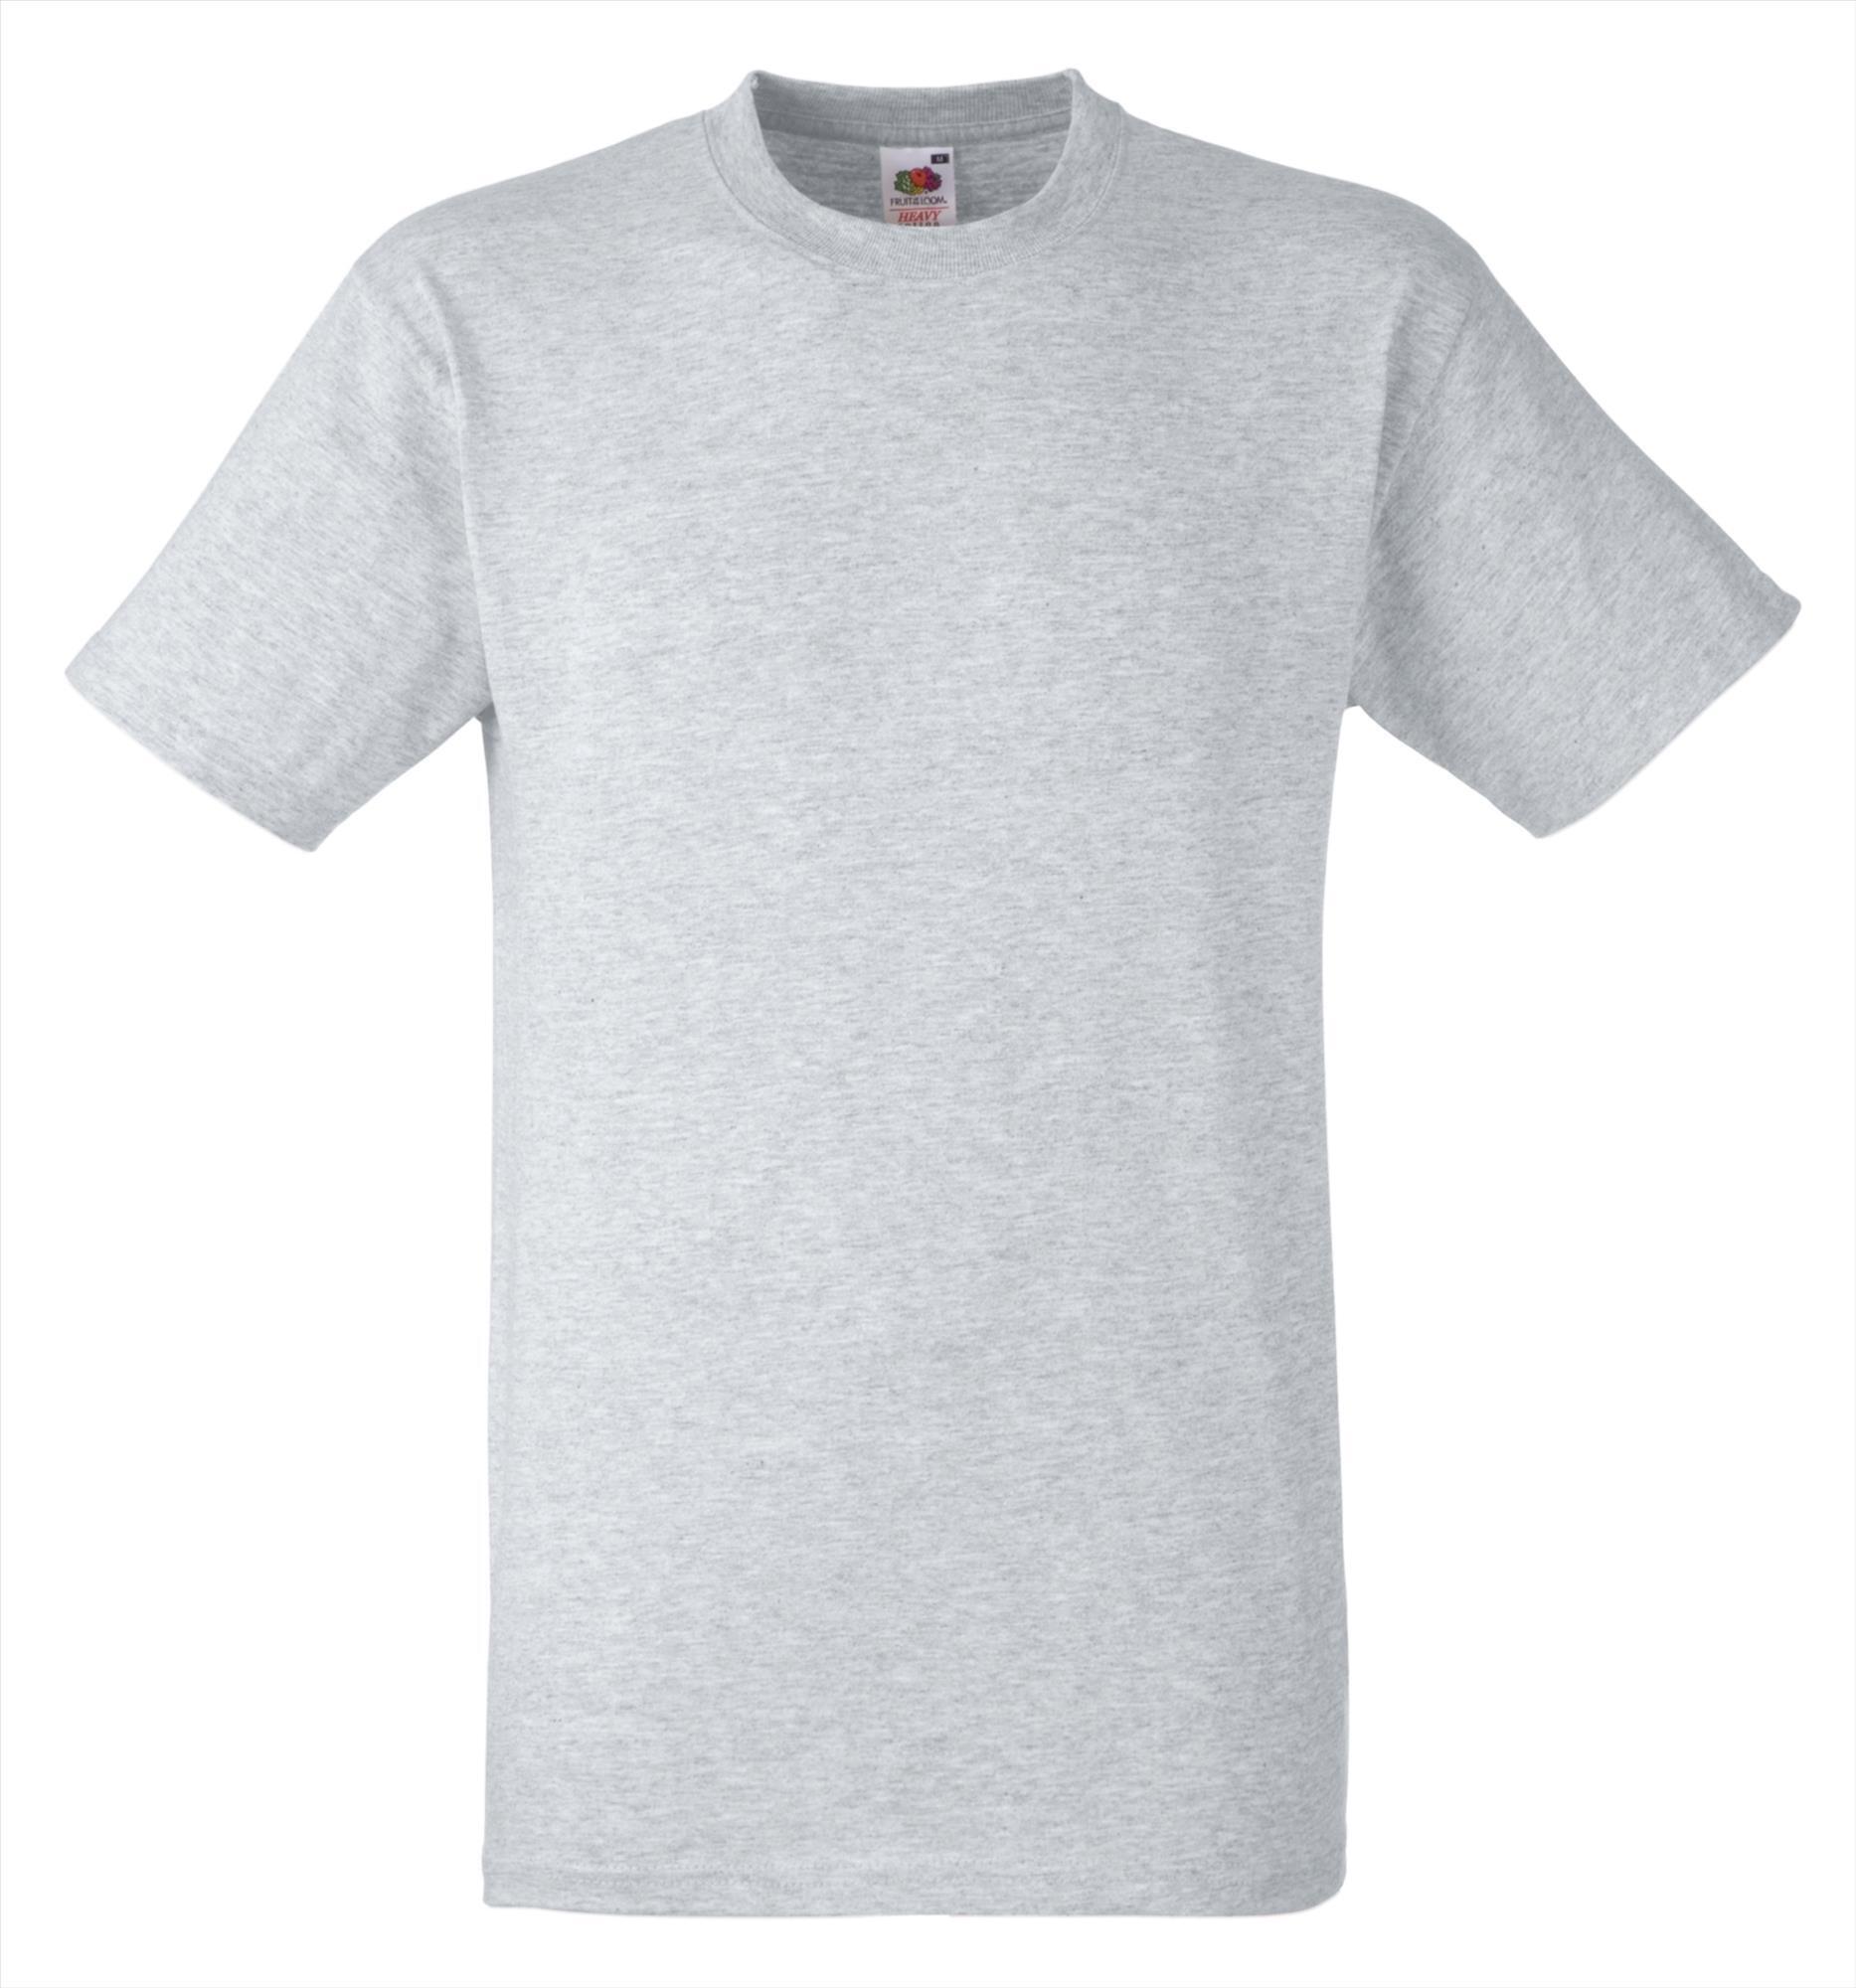 T-shirt unisex heide grijs lekker dik personaliseren je eigen opdruk prima werk T-shirt